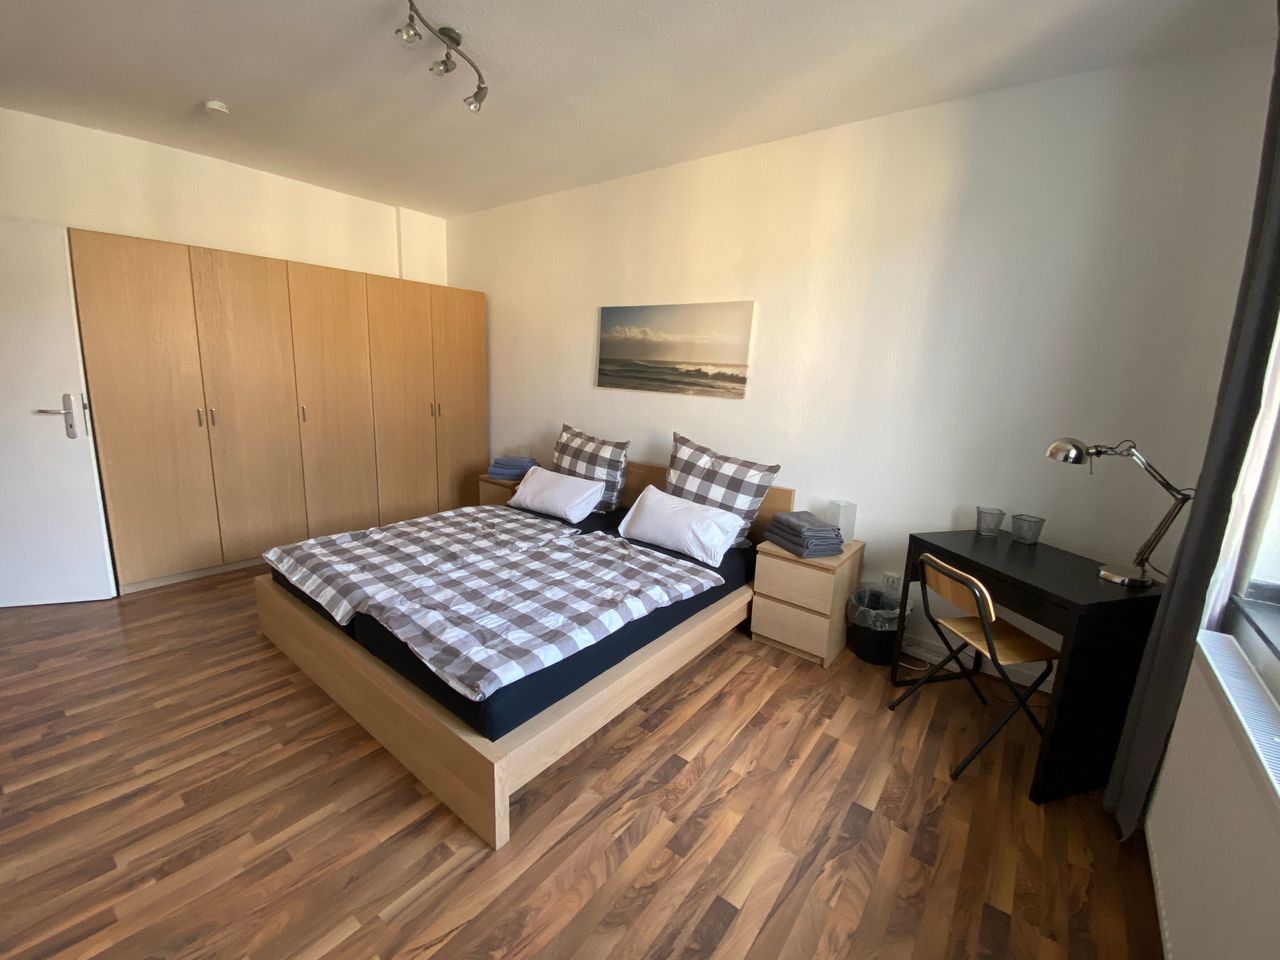 Furnished apartment in best location in Düsseldorf-Pempelfort